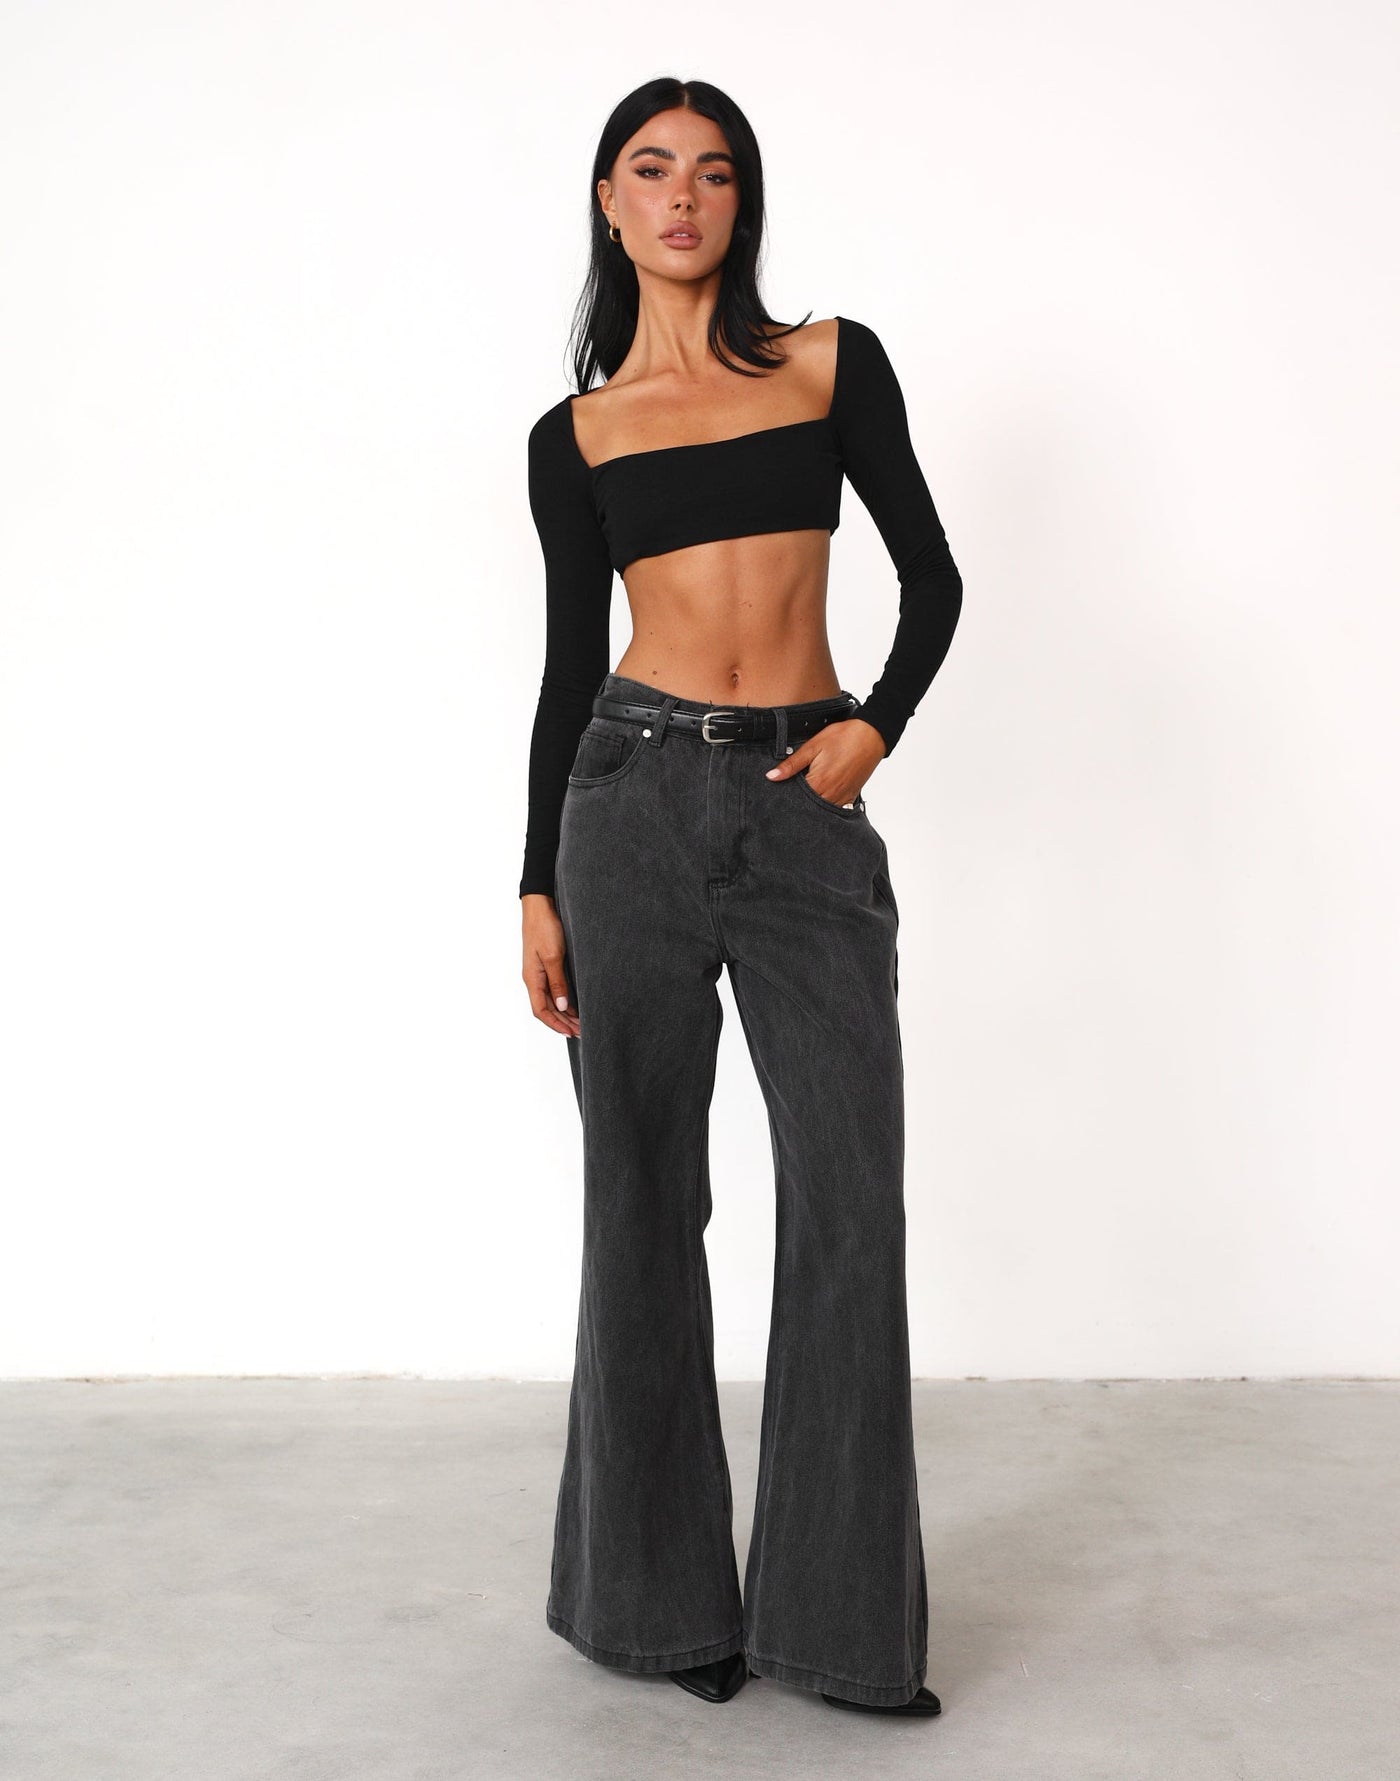 Broadway Crop Top (Black) - Long Sleeved Crop Top - Women's Top - Charcoal Clothing